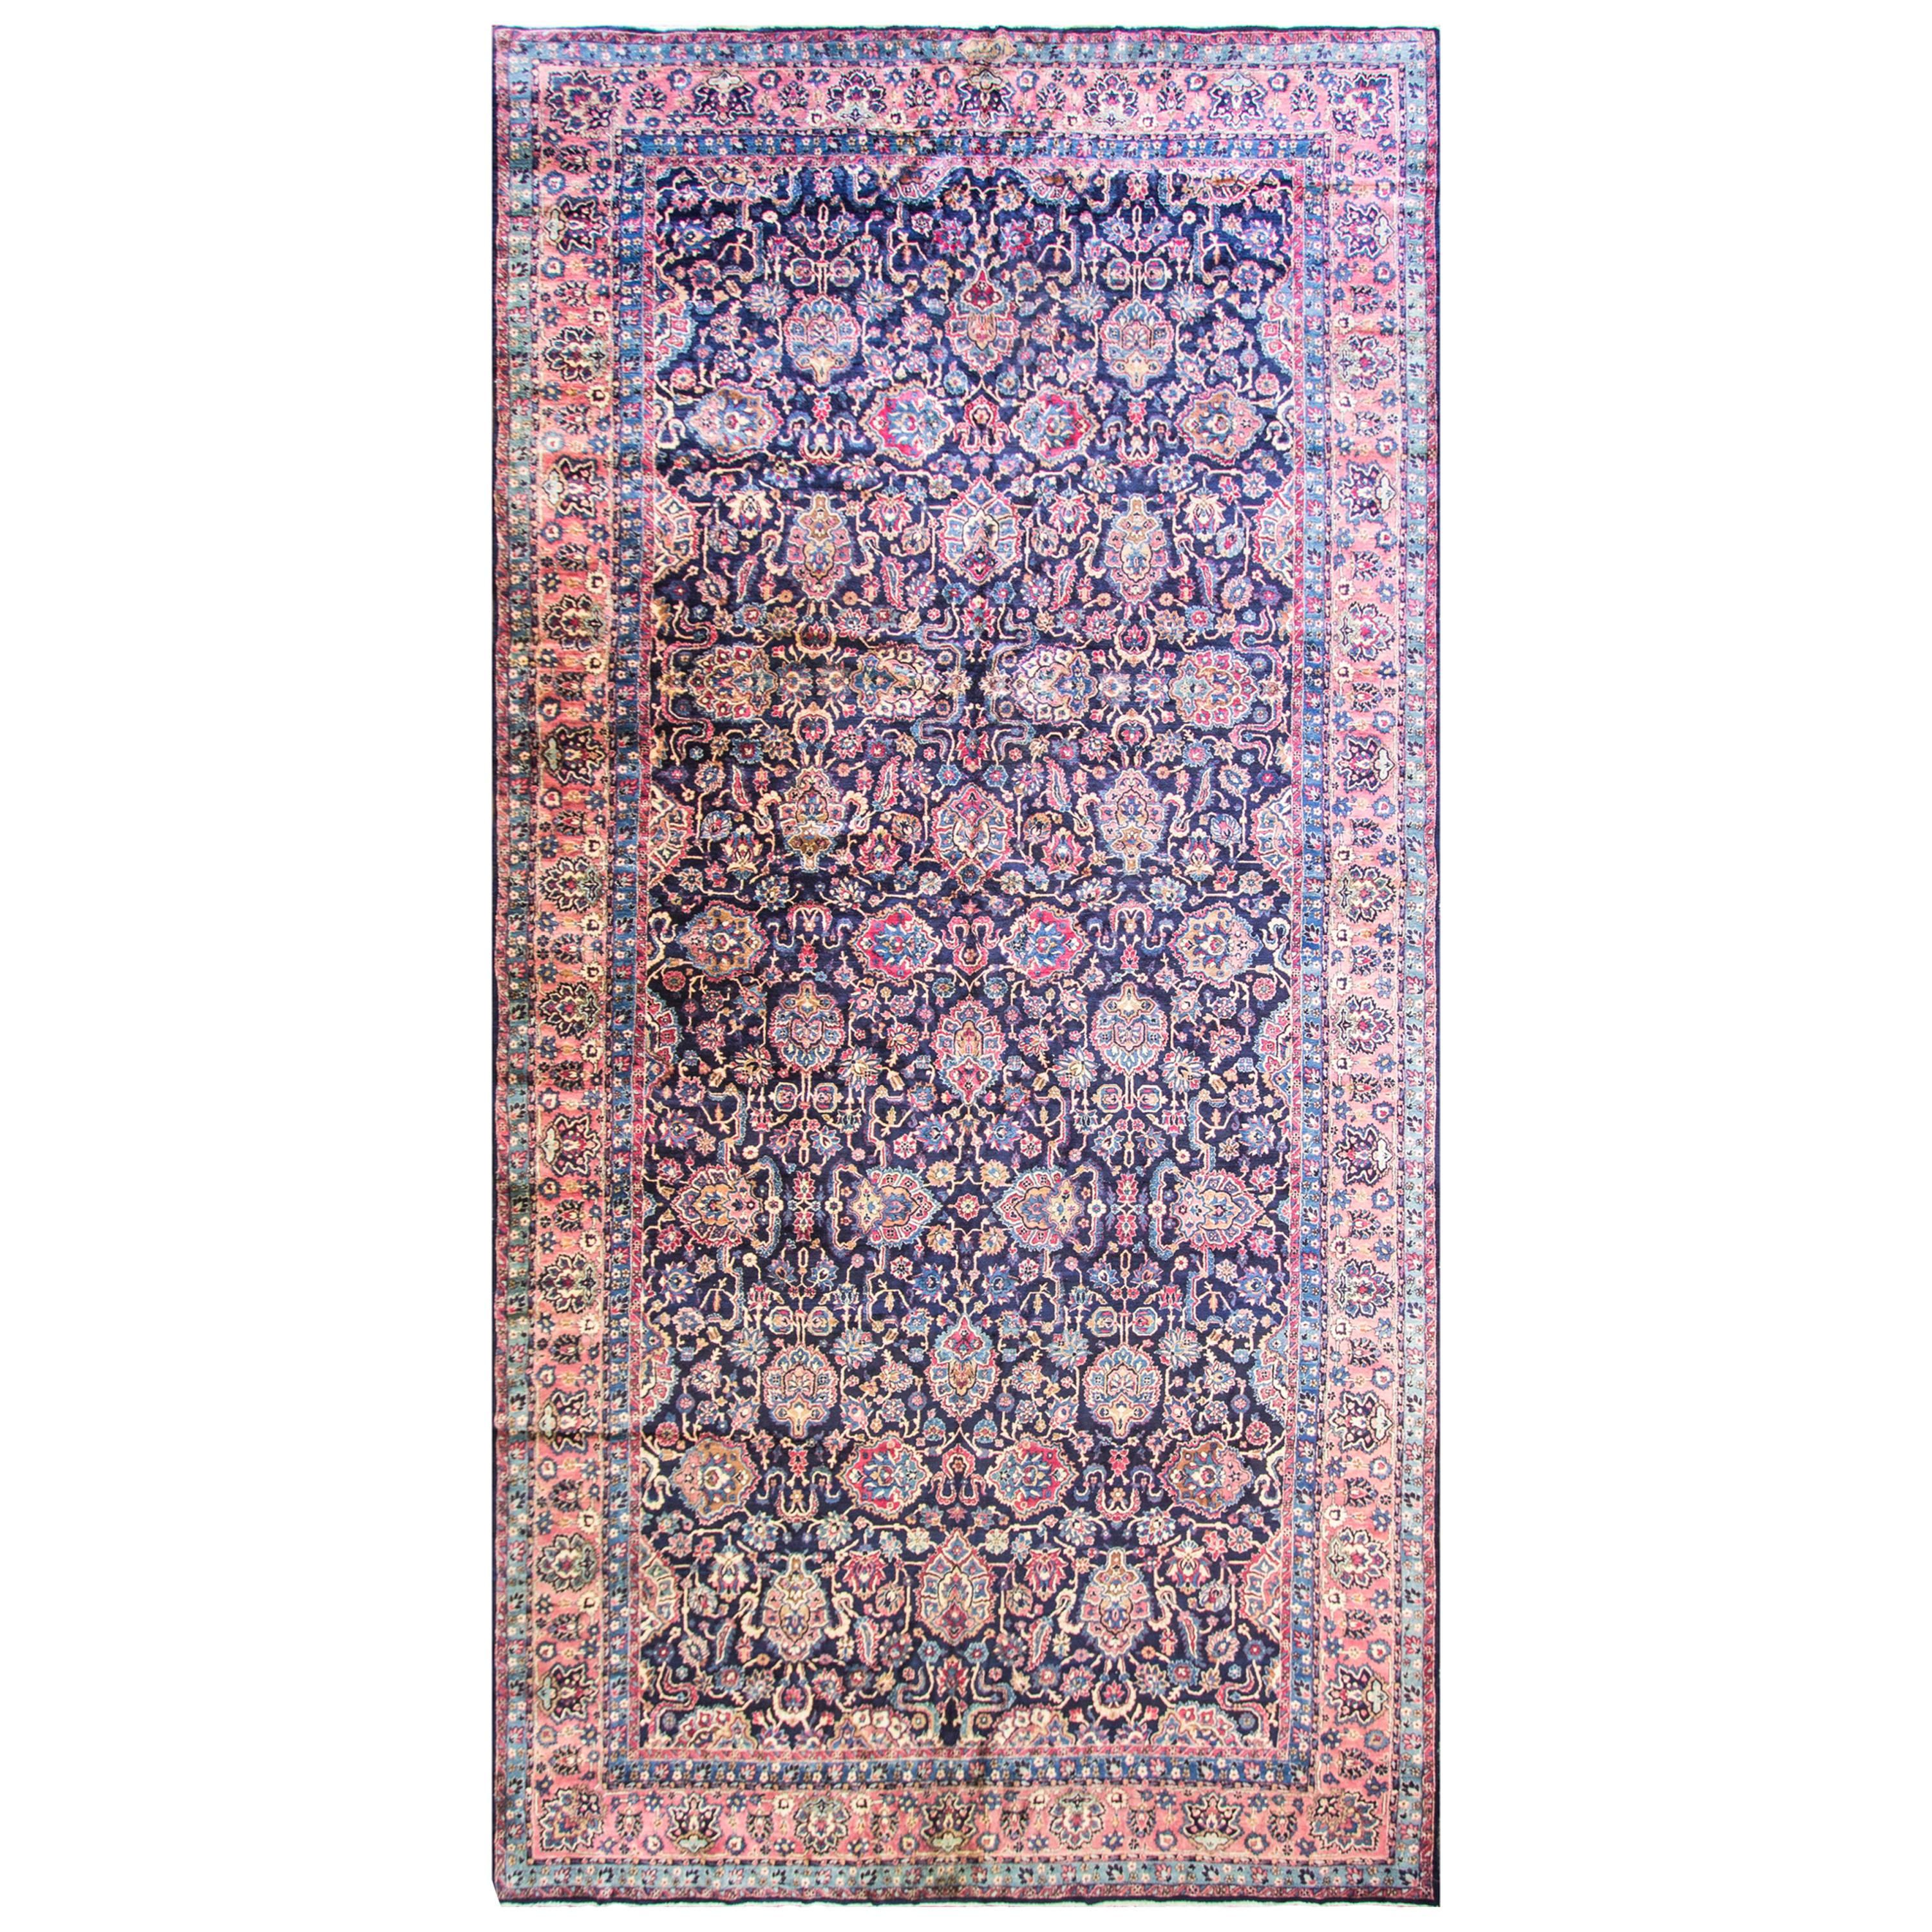 Amazing Oversize Antique Persian Kerman Carpet